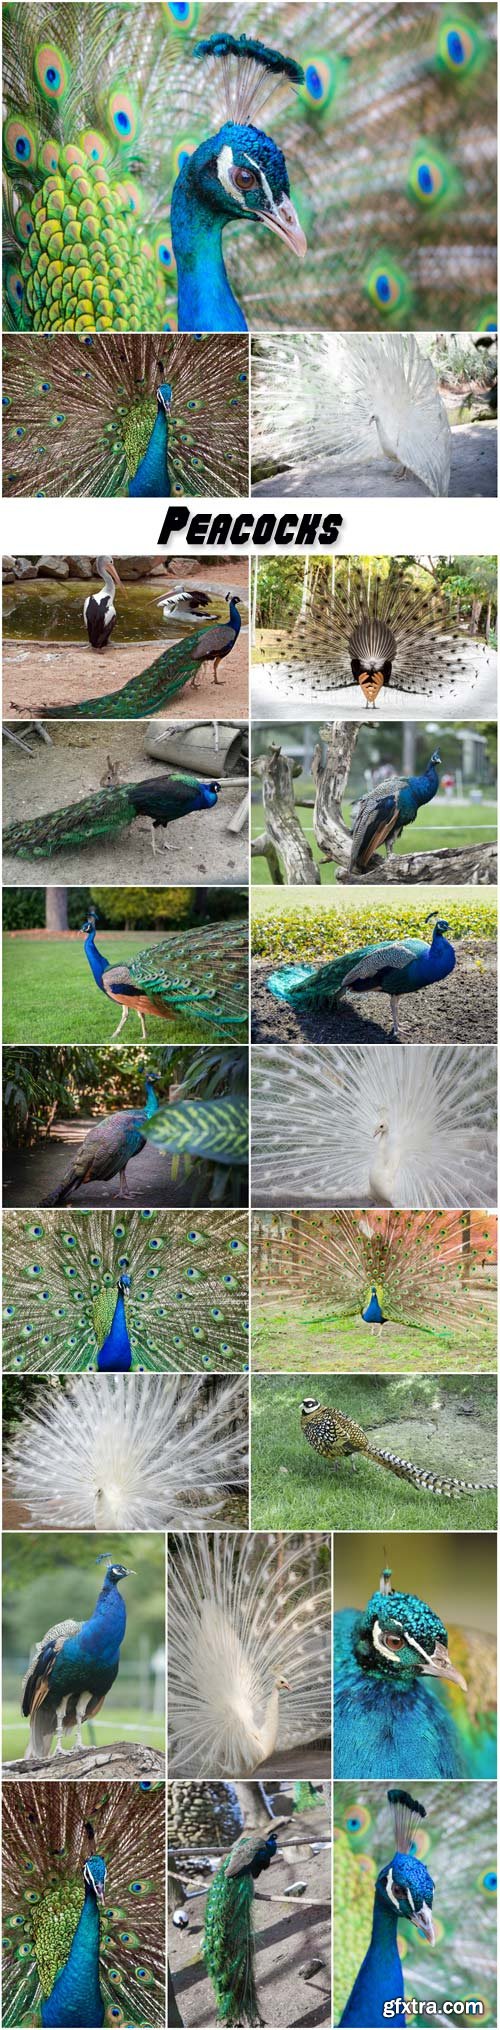 Peacocks, exotic bird